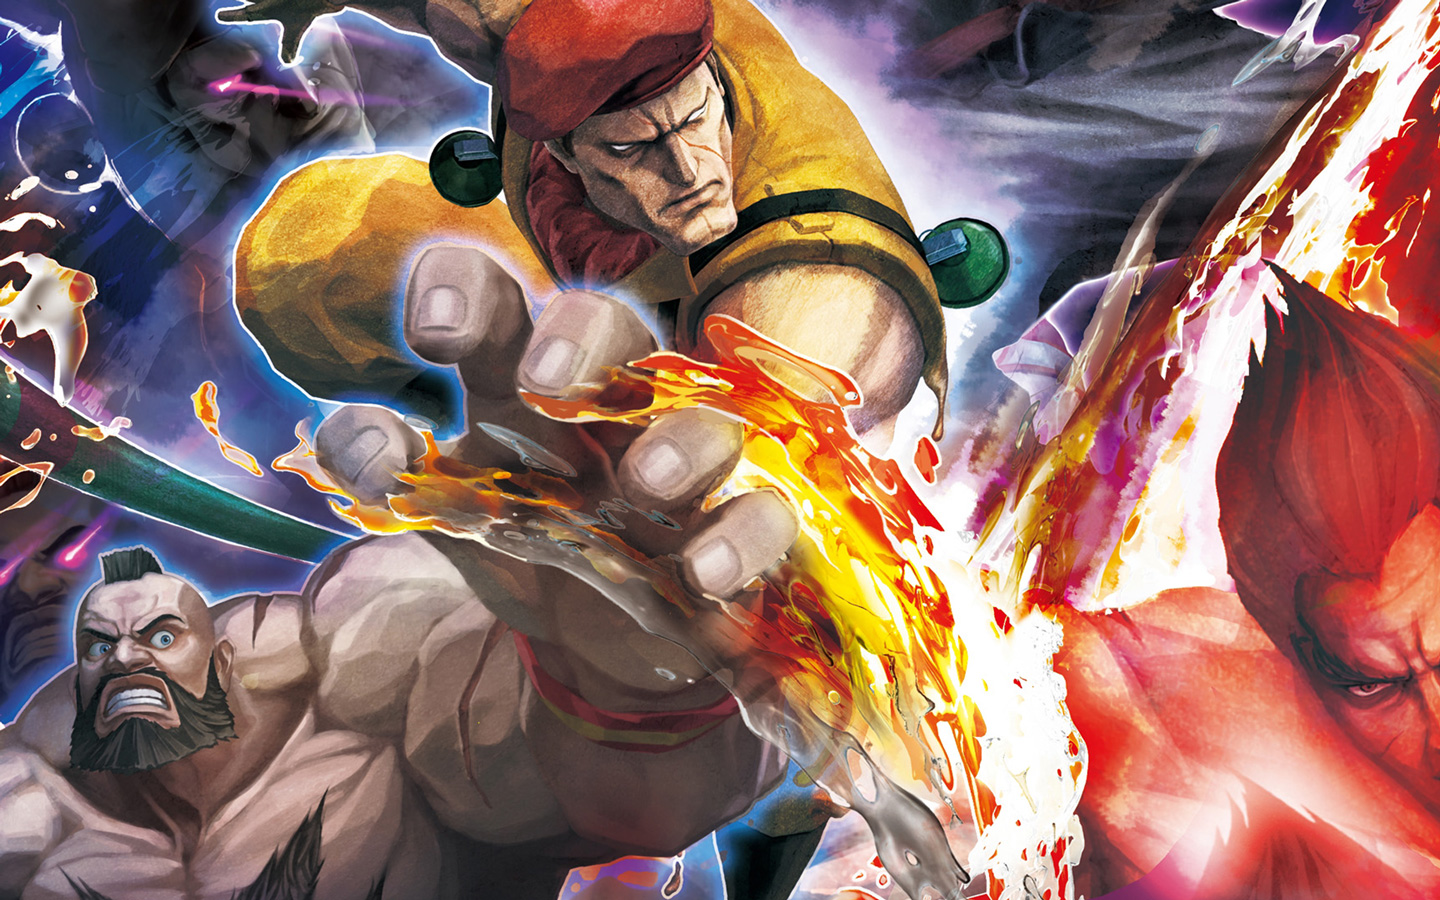  Street Fighter X Tekken Wallpaper in 1440x900 1440x900